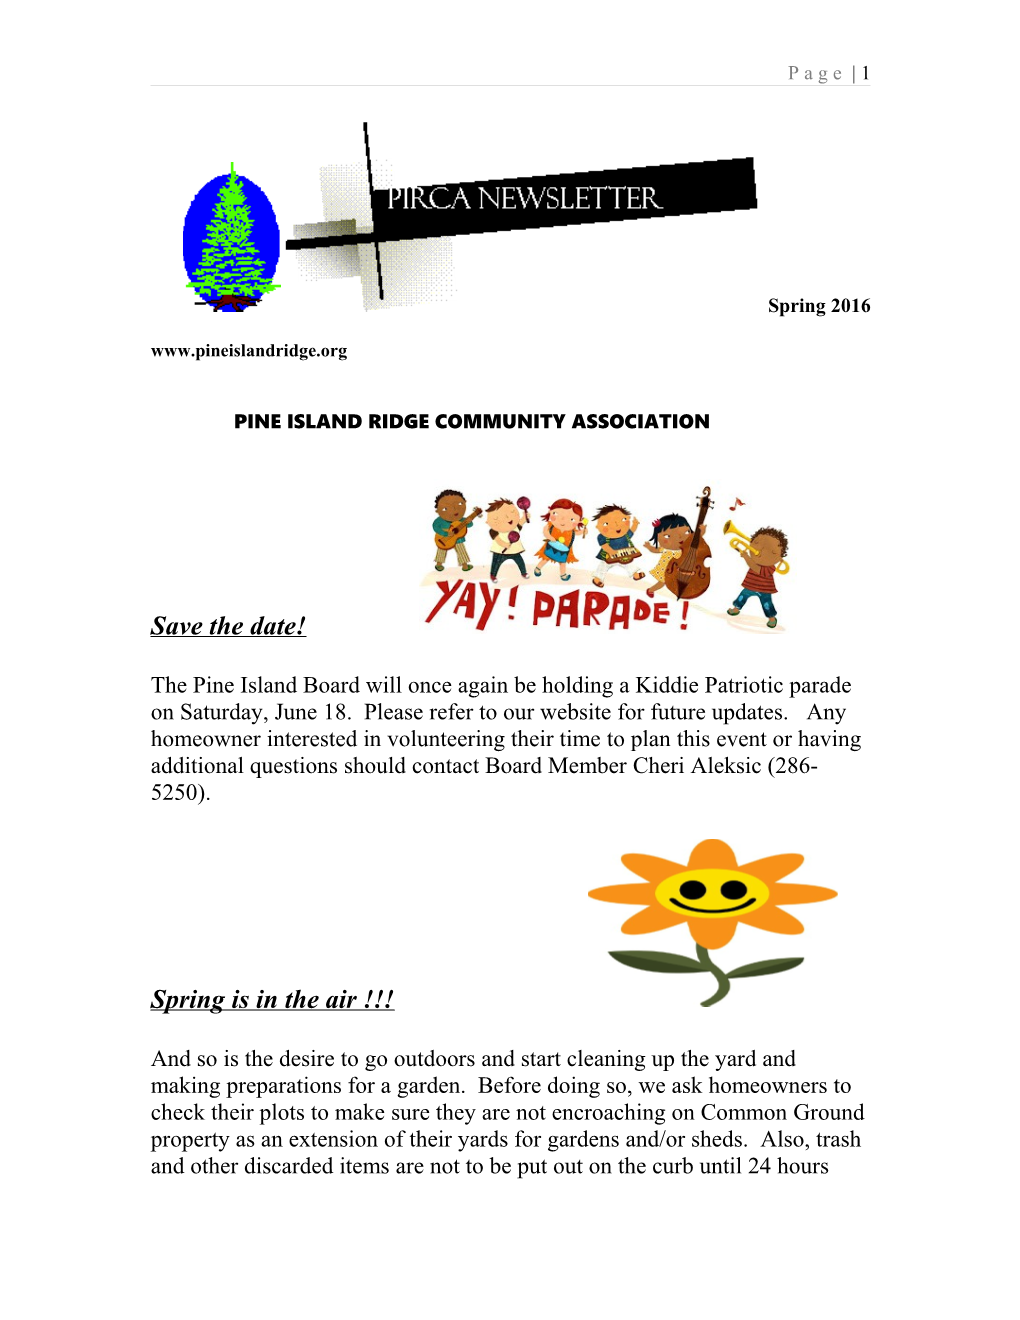 Pine Island Ridge Community Association